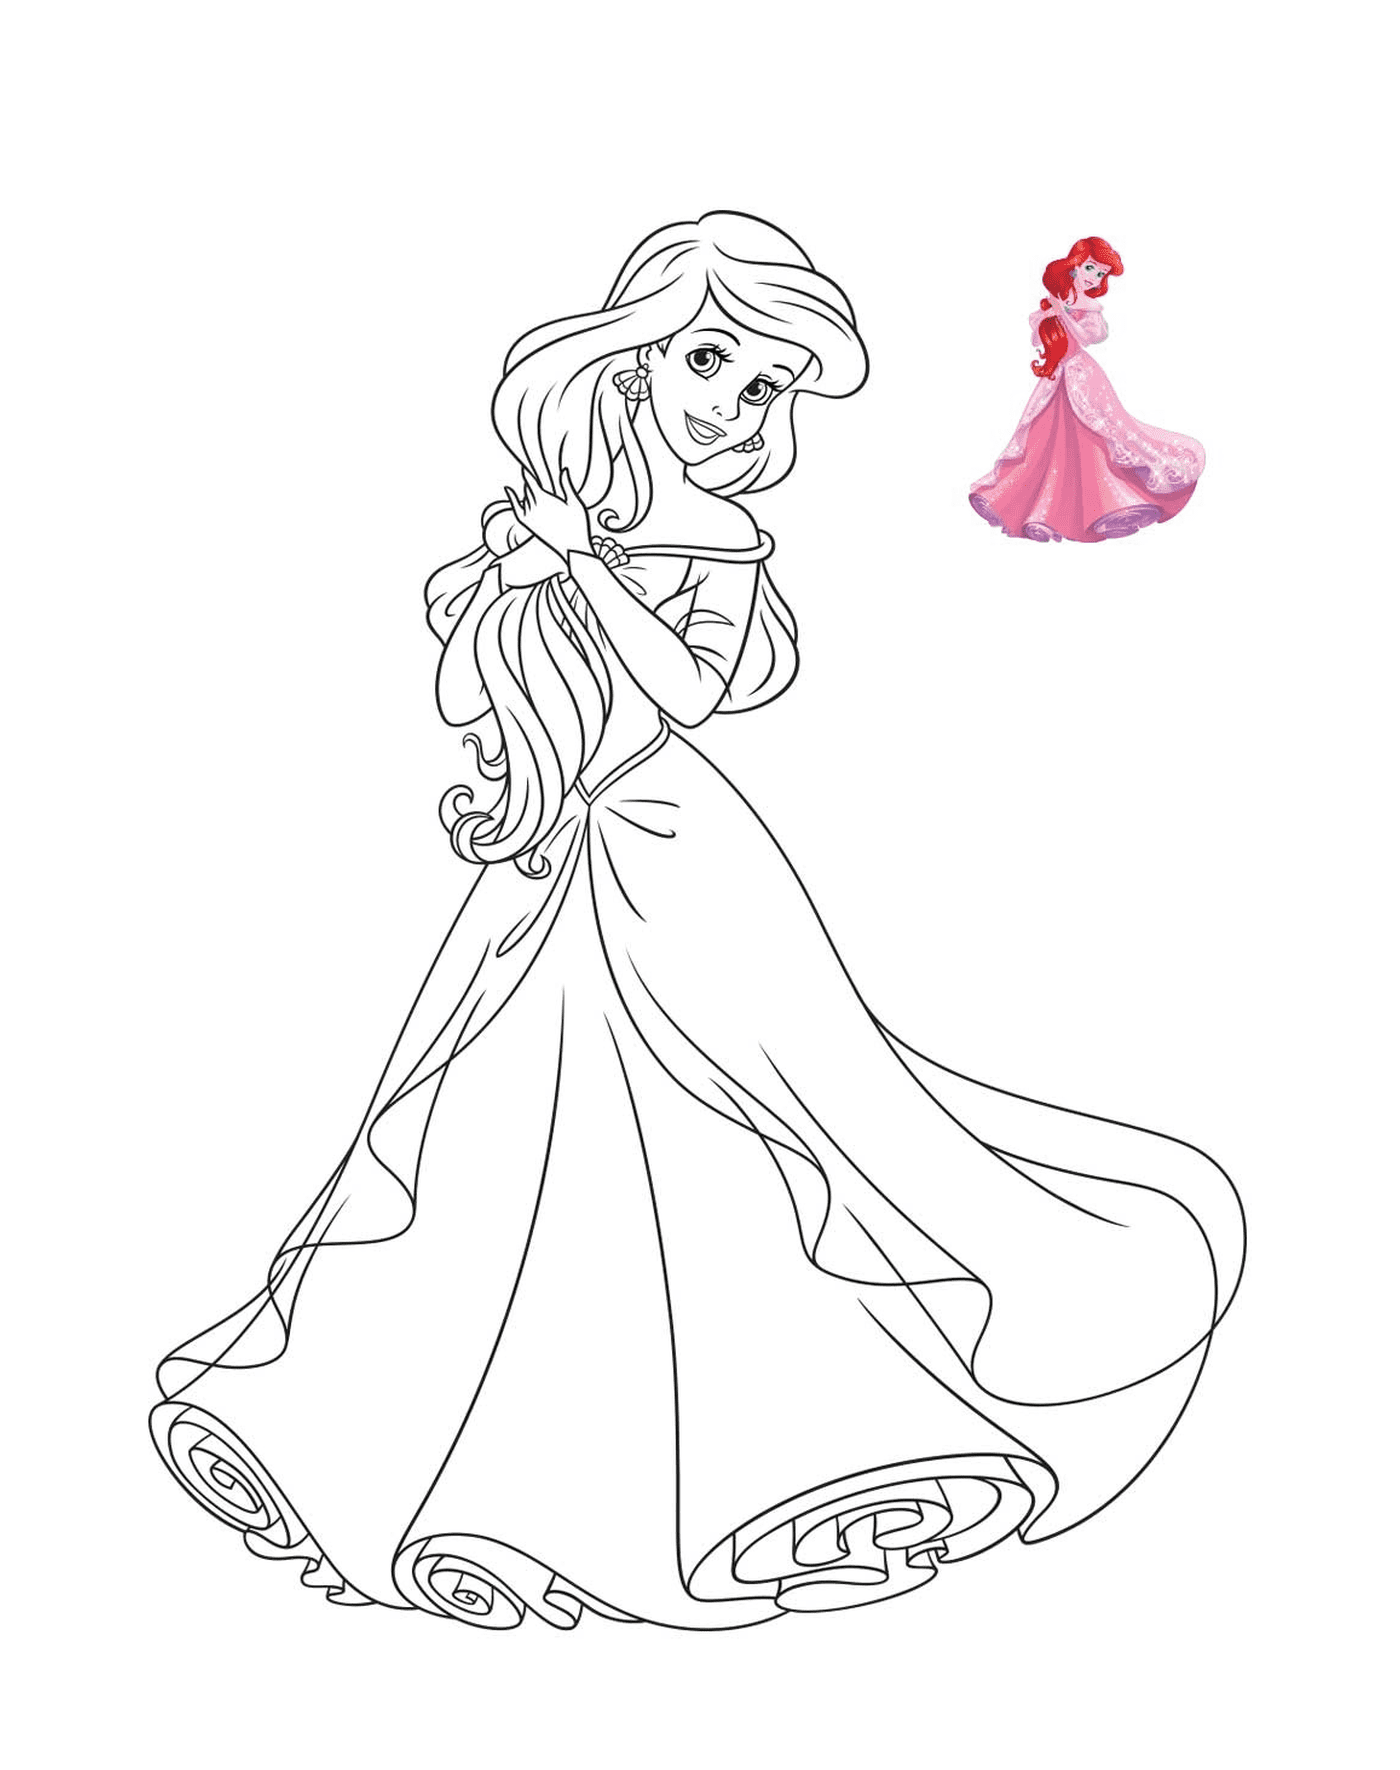  Ariel, a Disney princess 